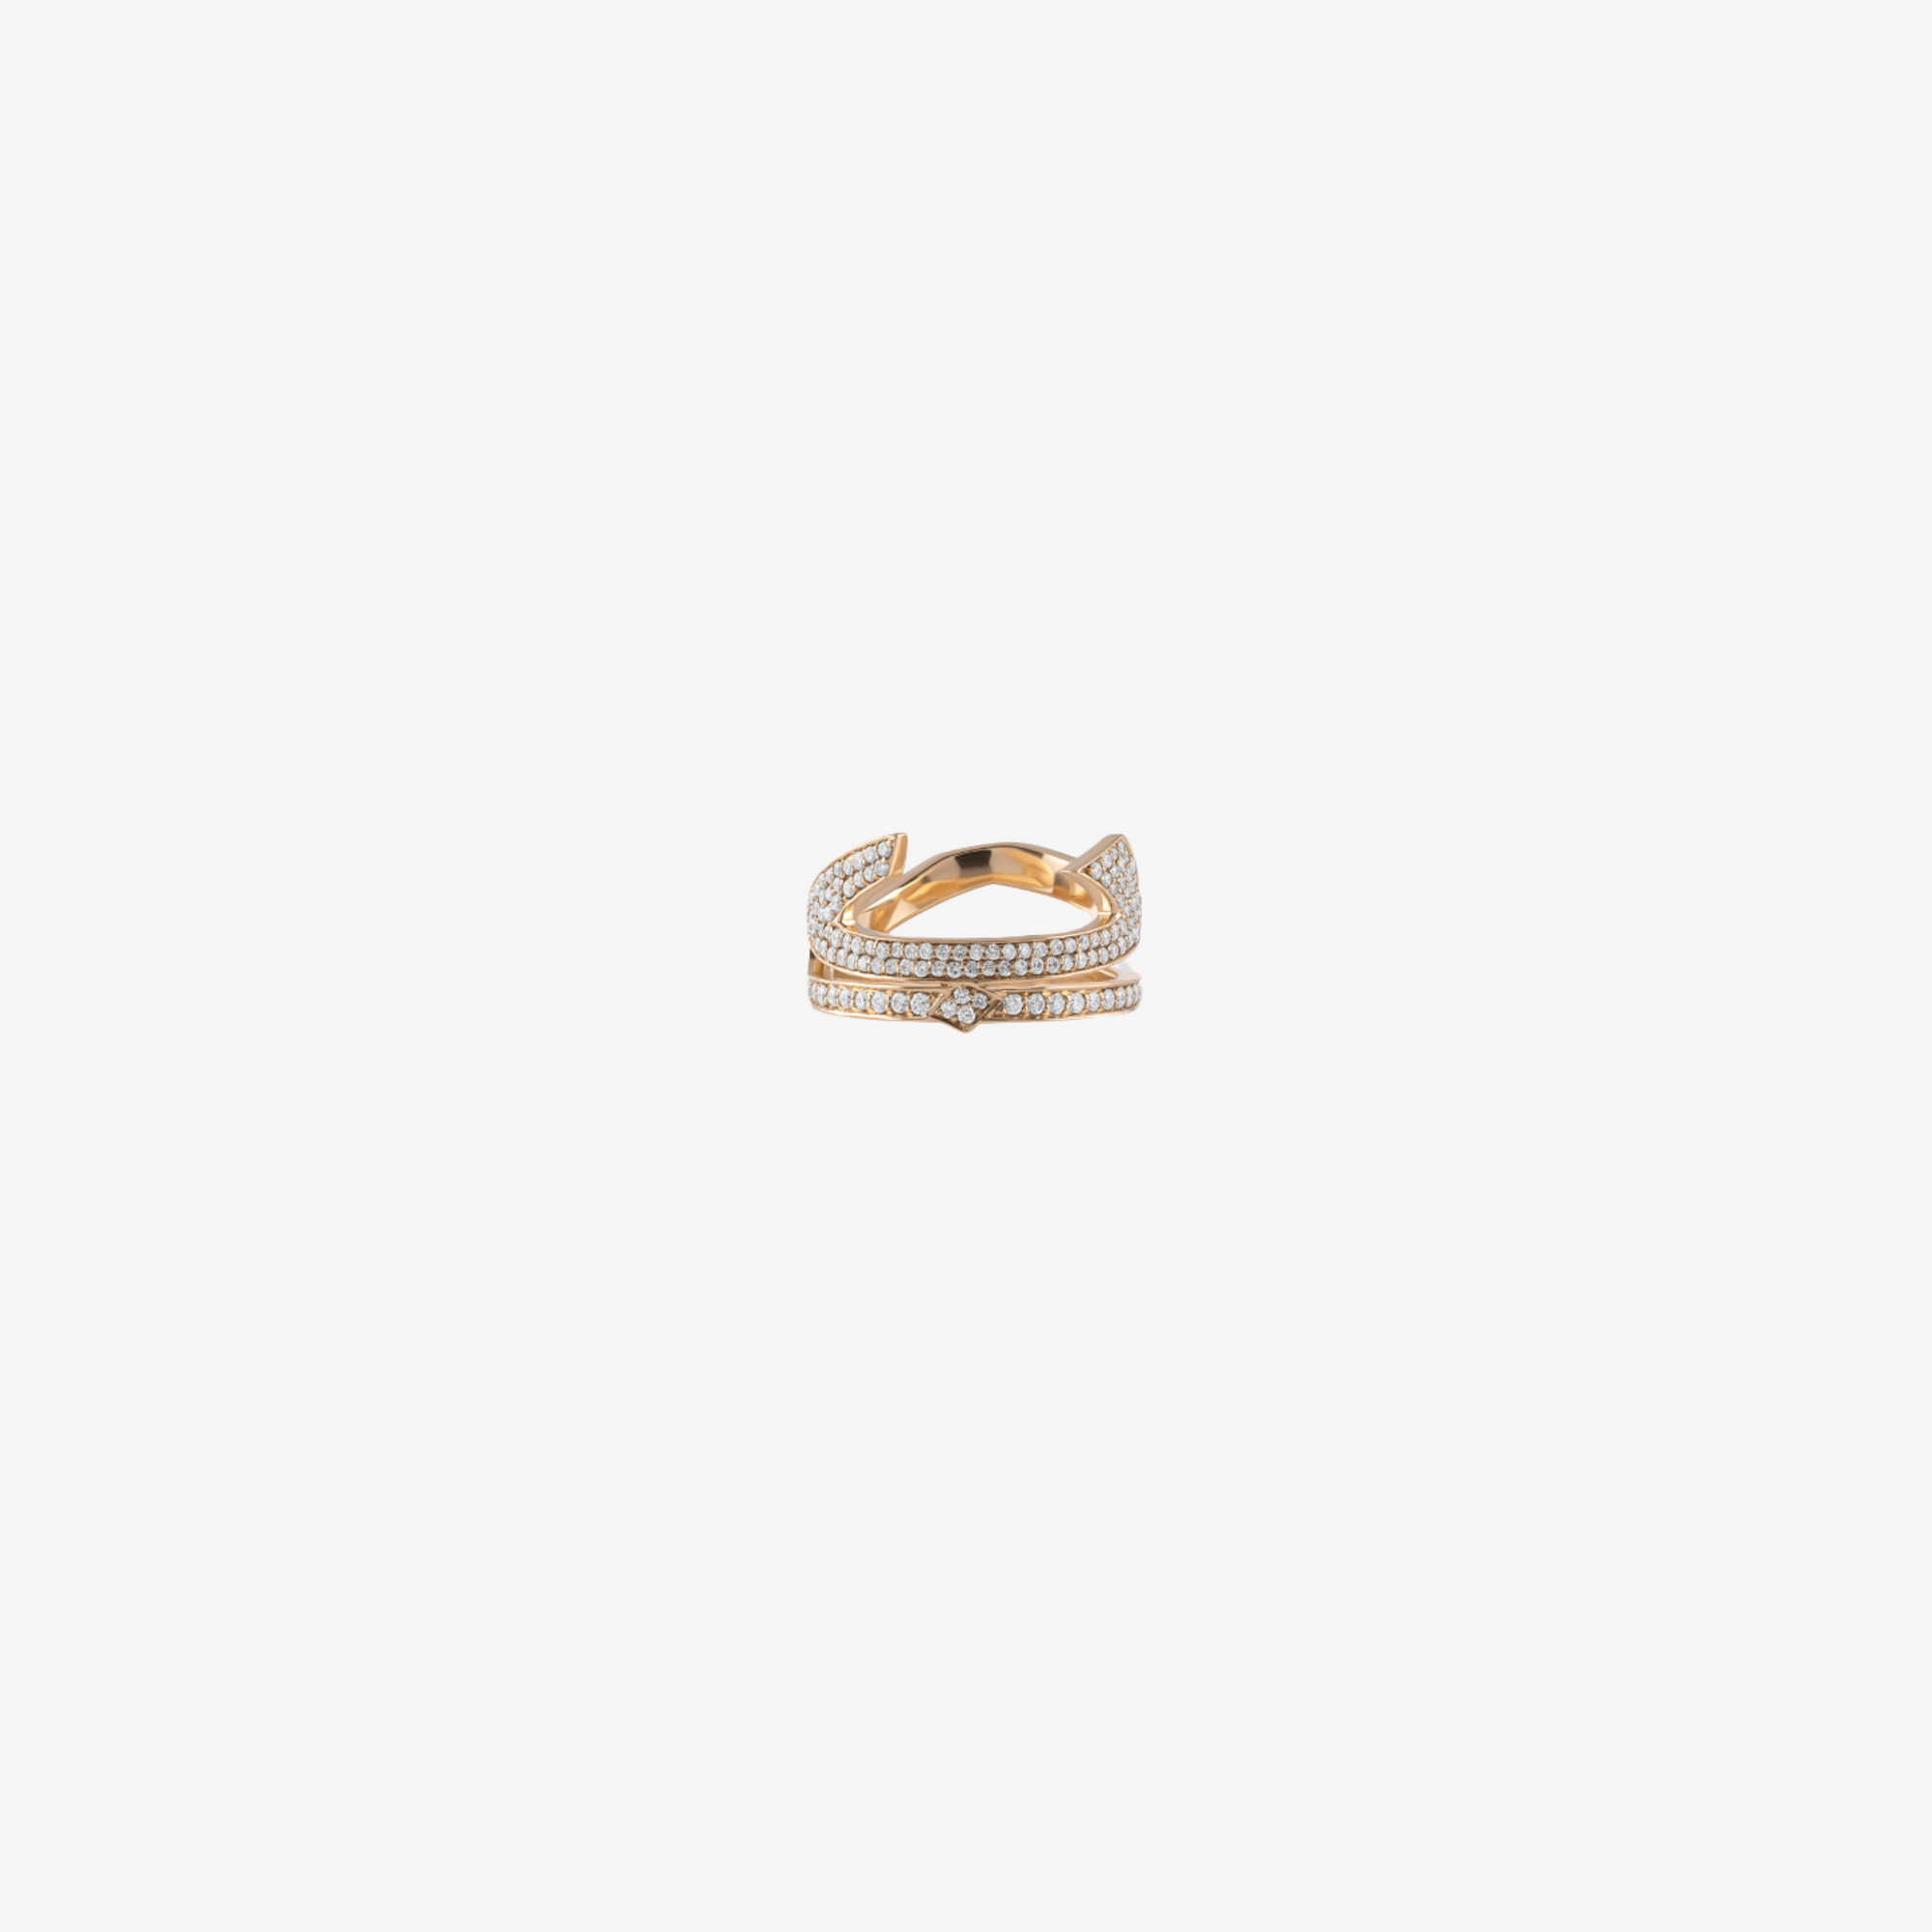 HOBBI - 18K Diamond “Love” Ring in Borderless Gold